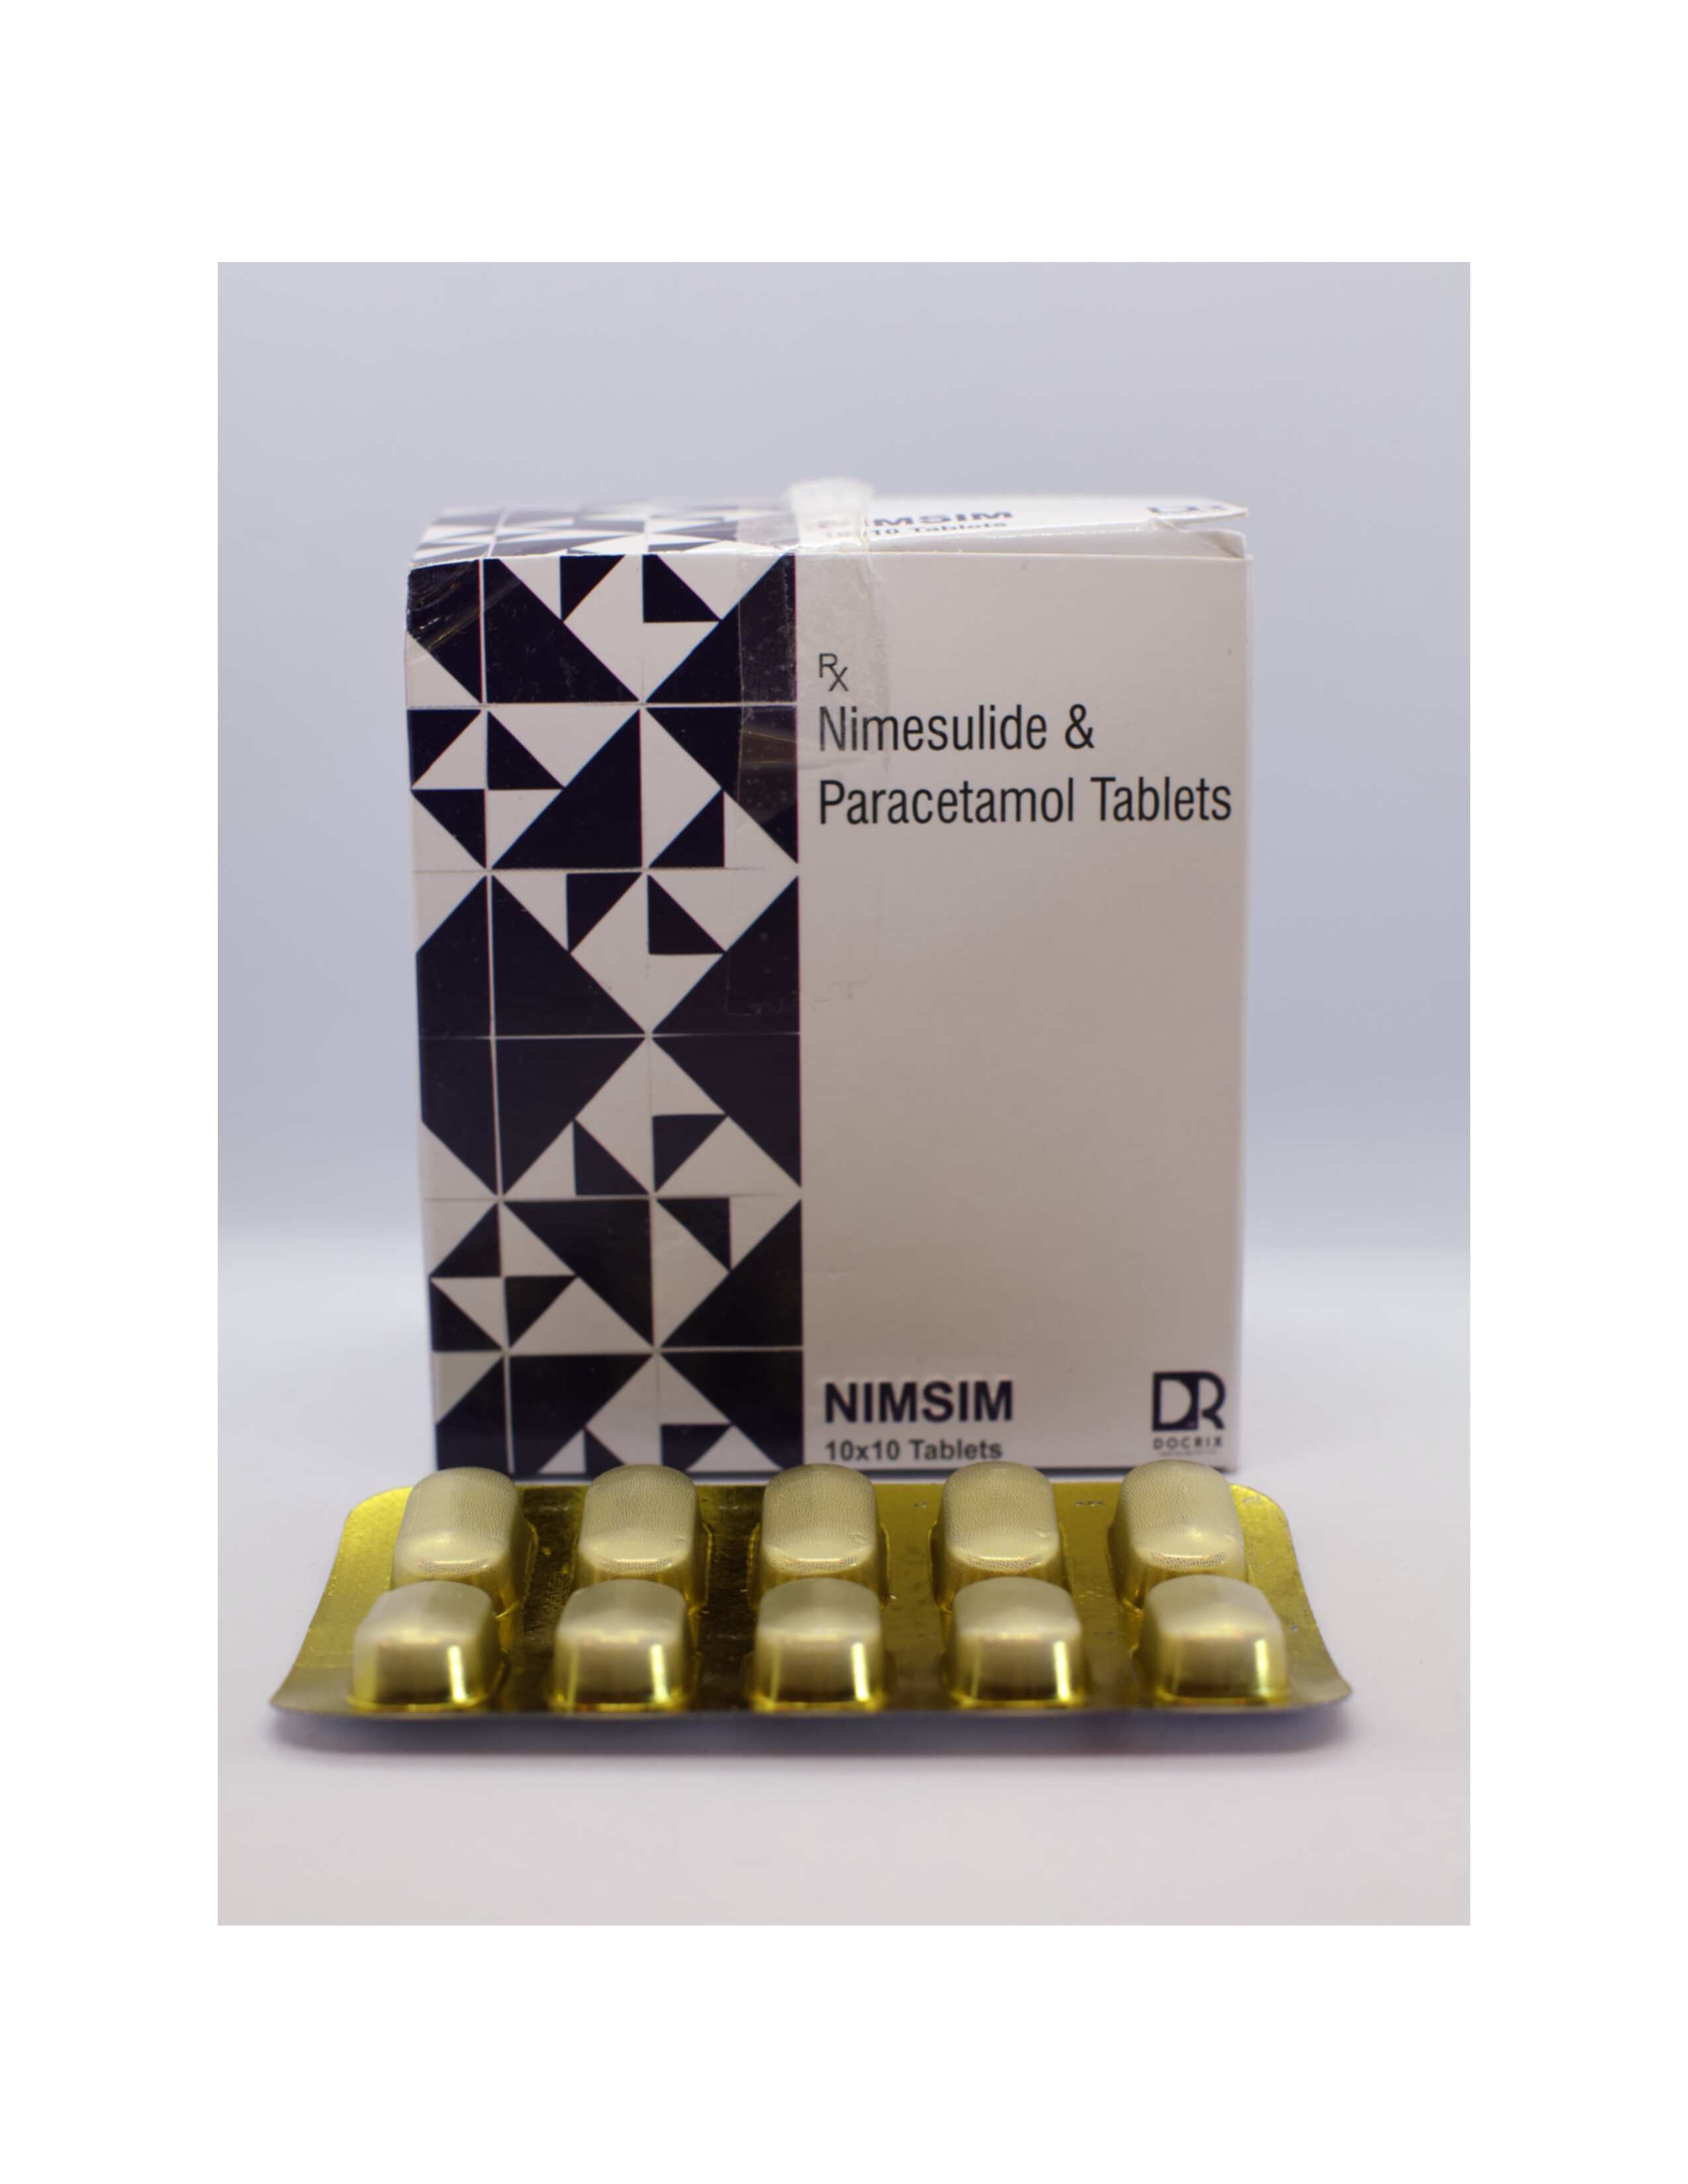 Product Name: Nimsim, Compositions of Nimsim are Nimesulide & Paracetamol Tablets - Docrix Healthcare